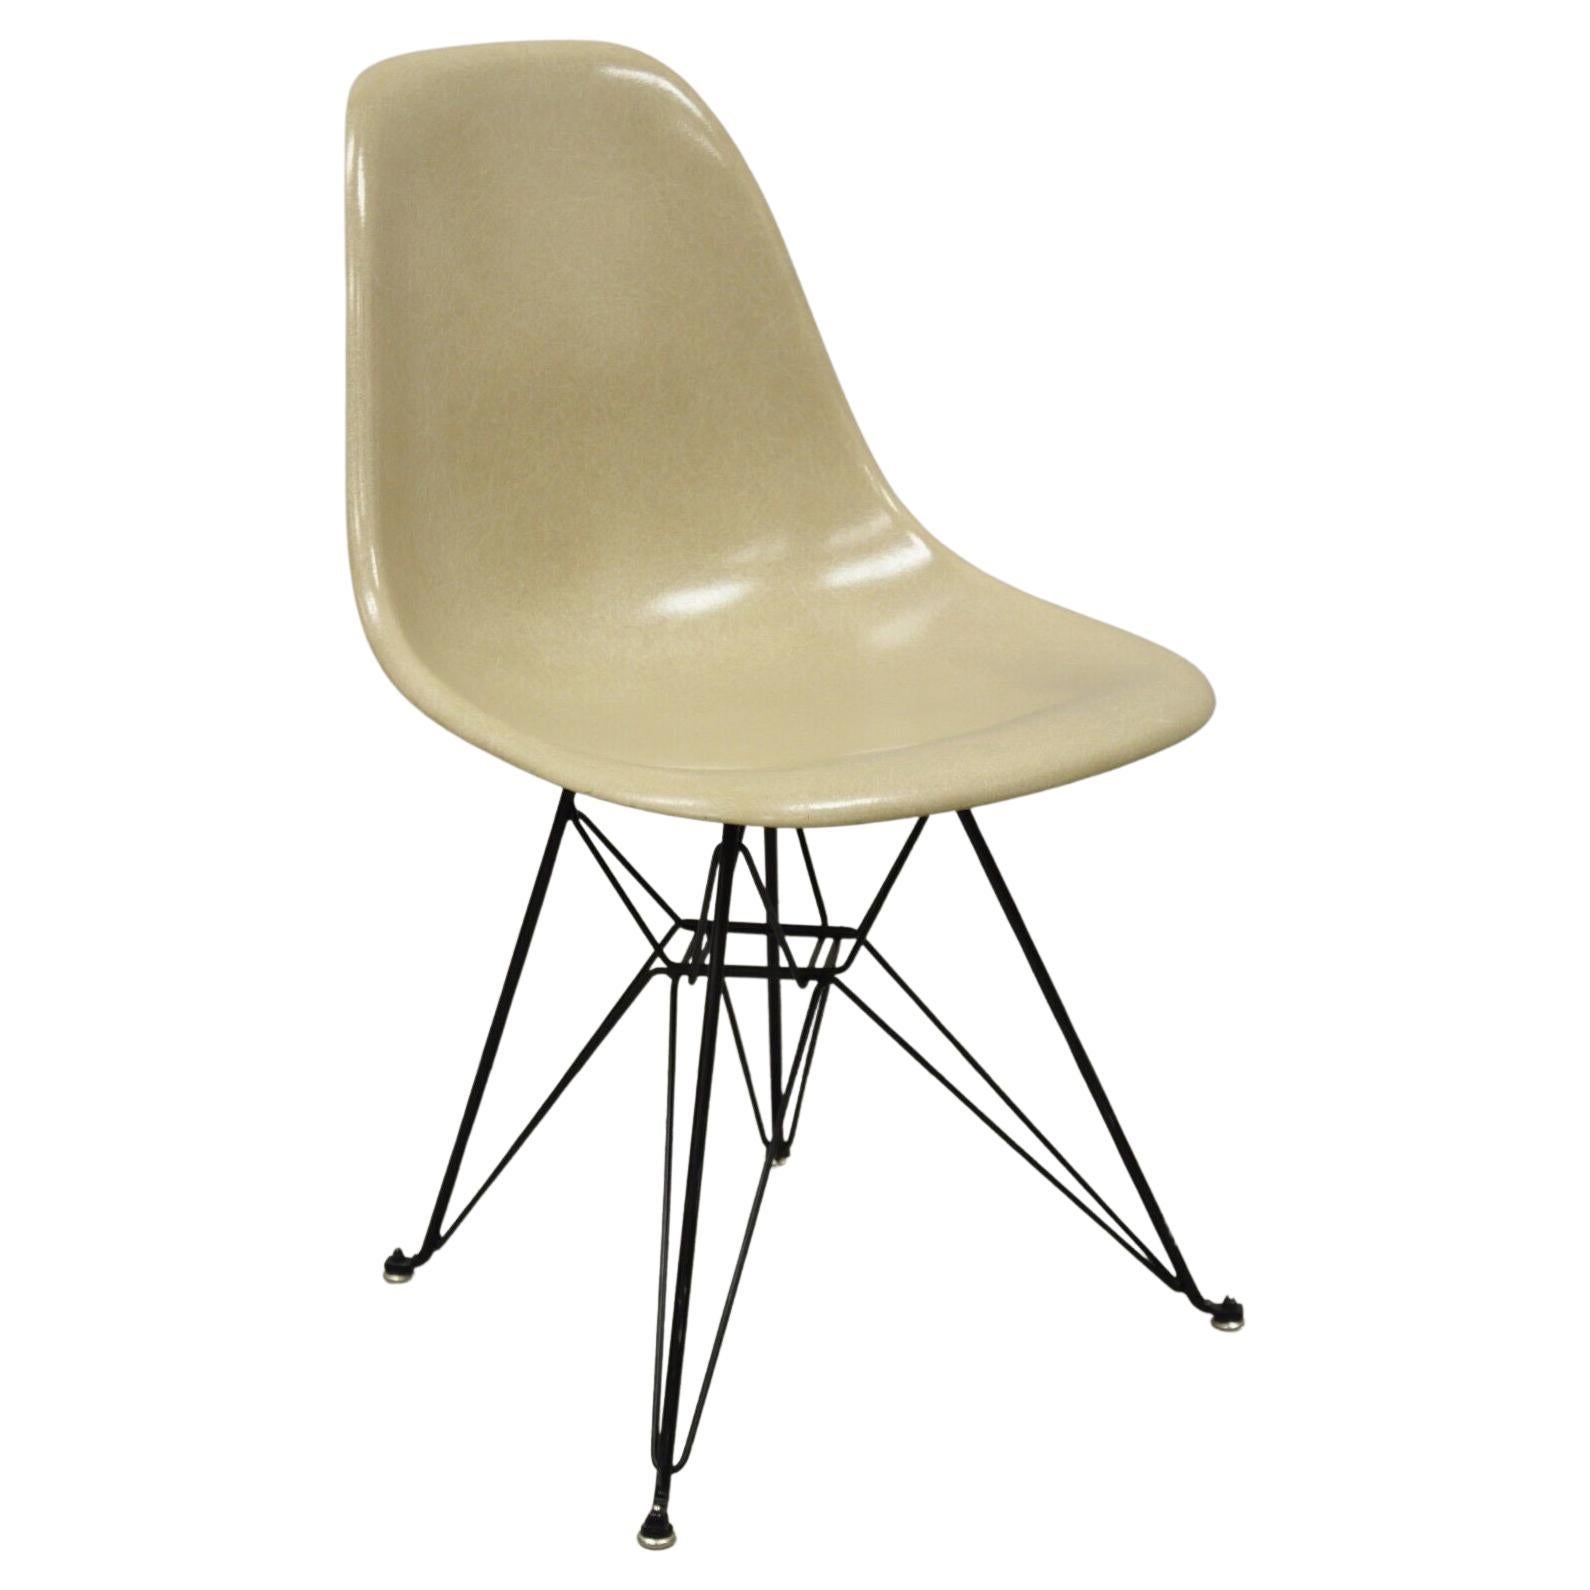 Modernica Case Study Oatmeal Fiberglass Side Chair with Black Metal Base (B)